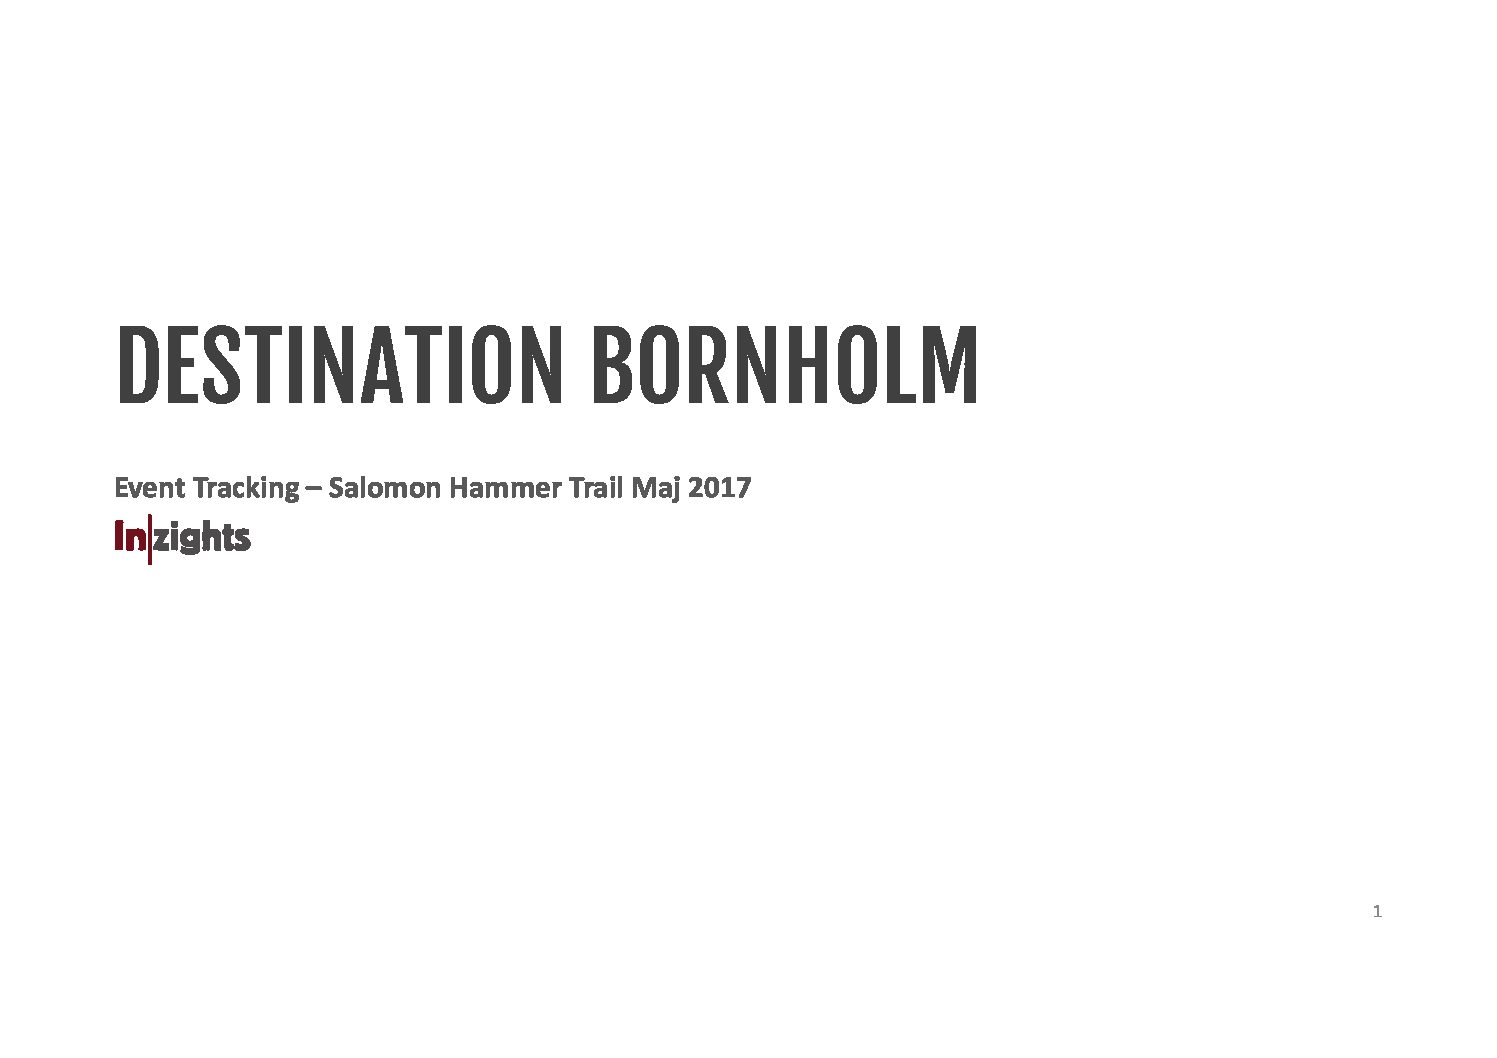 lunken Læge Plys dukke webdestination-bornholm-salomon-hammer-trail-2017 - Destination Bornholm ApS